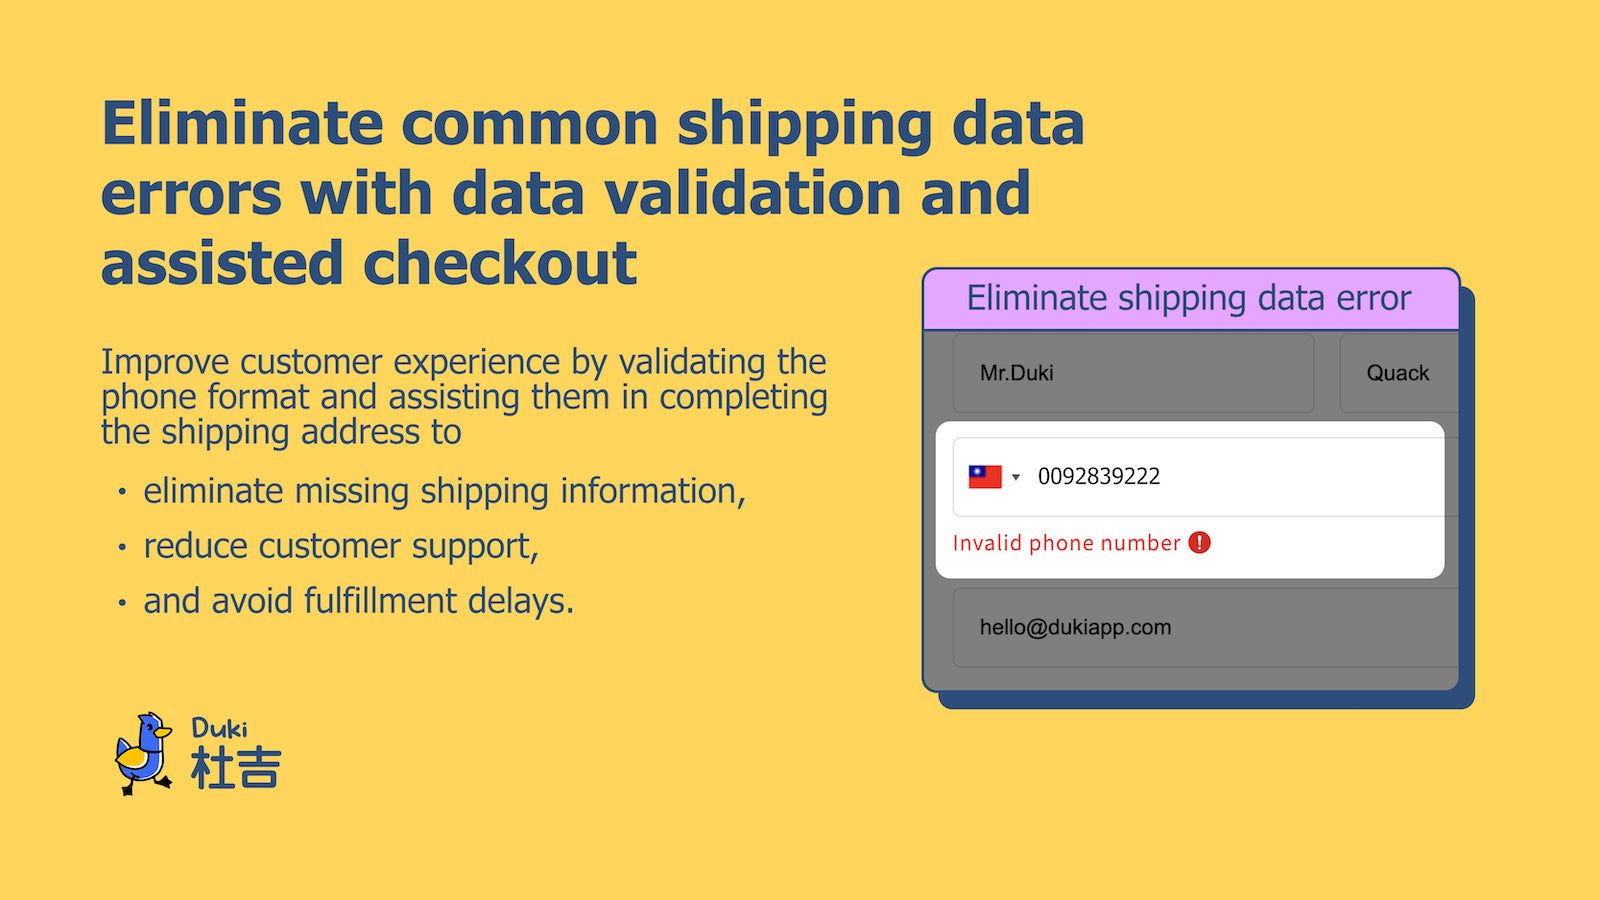 Eliminate common shipping data errors with data validation.